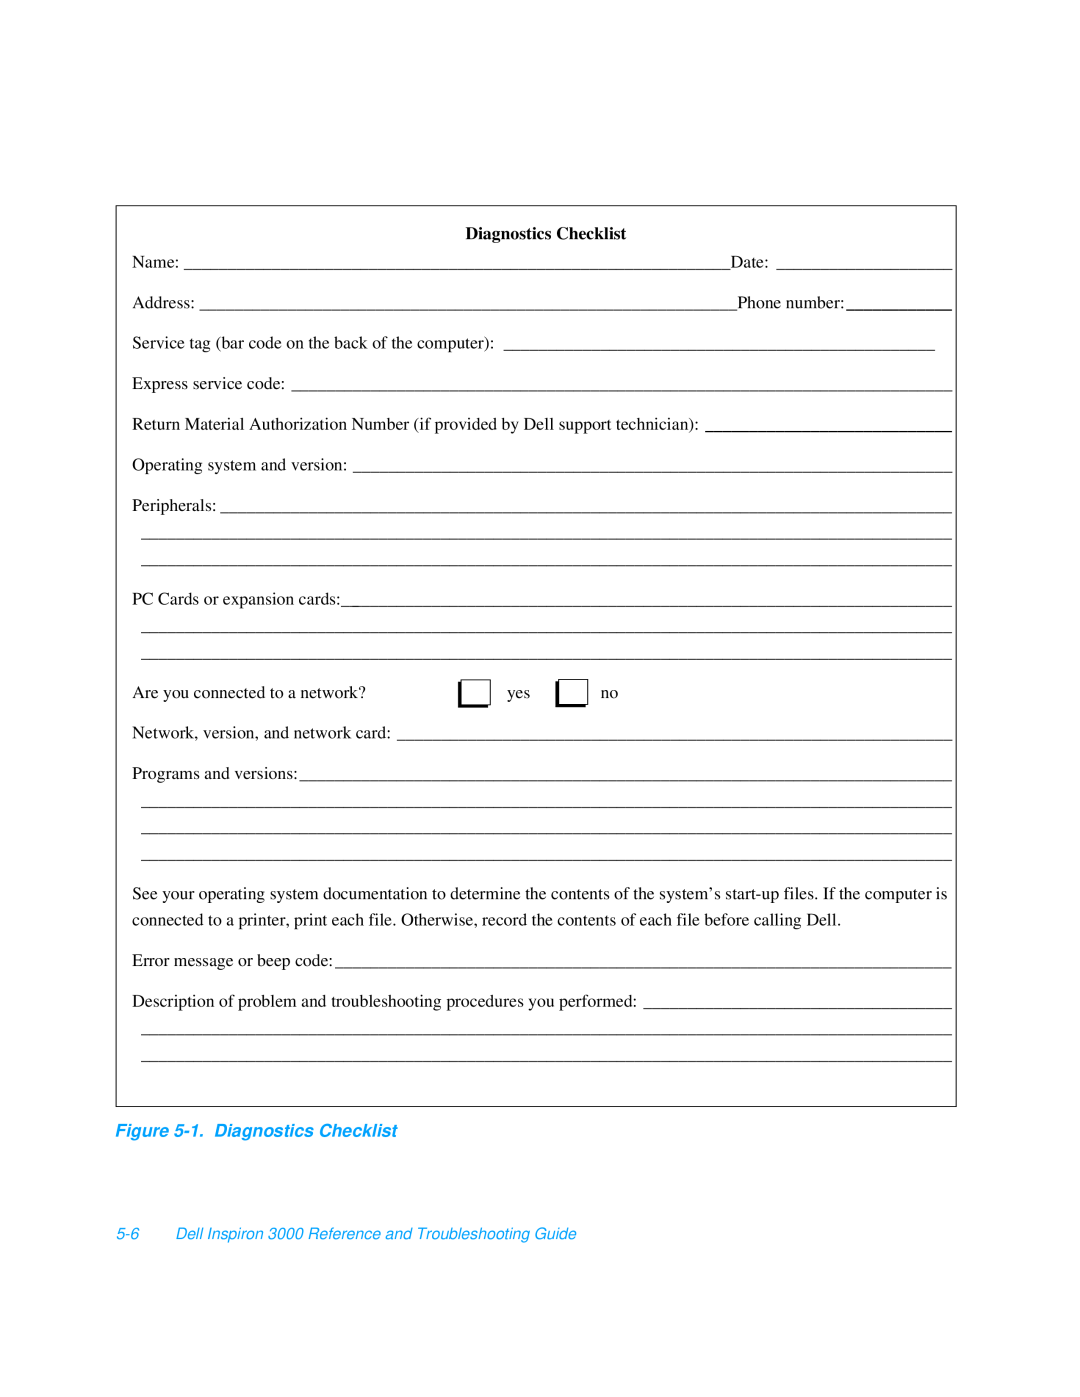 Dell 3000 manual 1. Diagnostics Checklist 